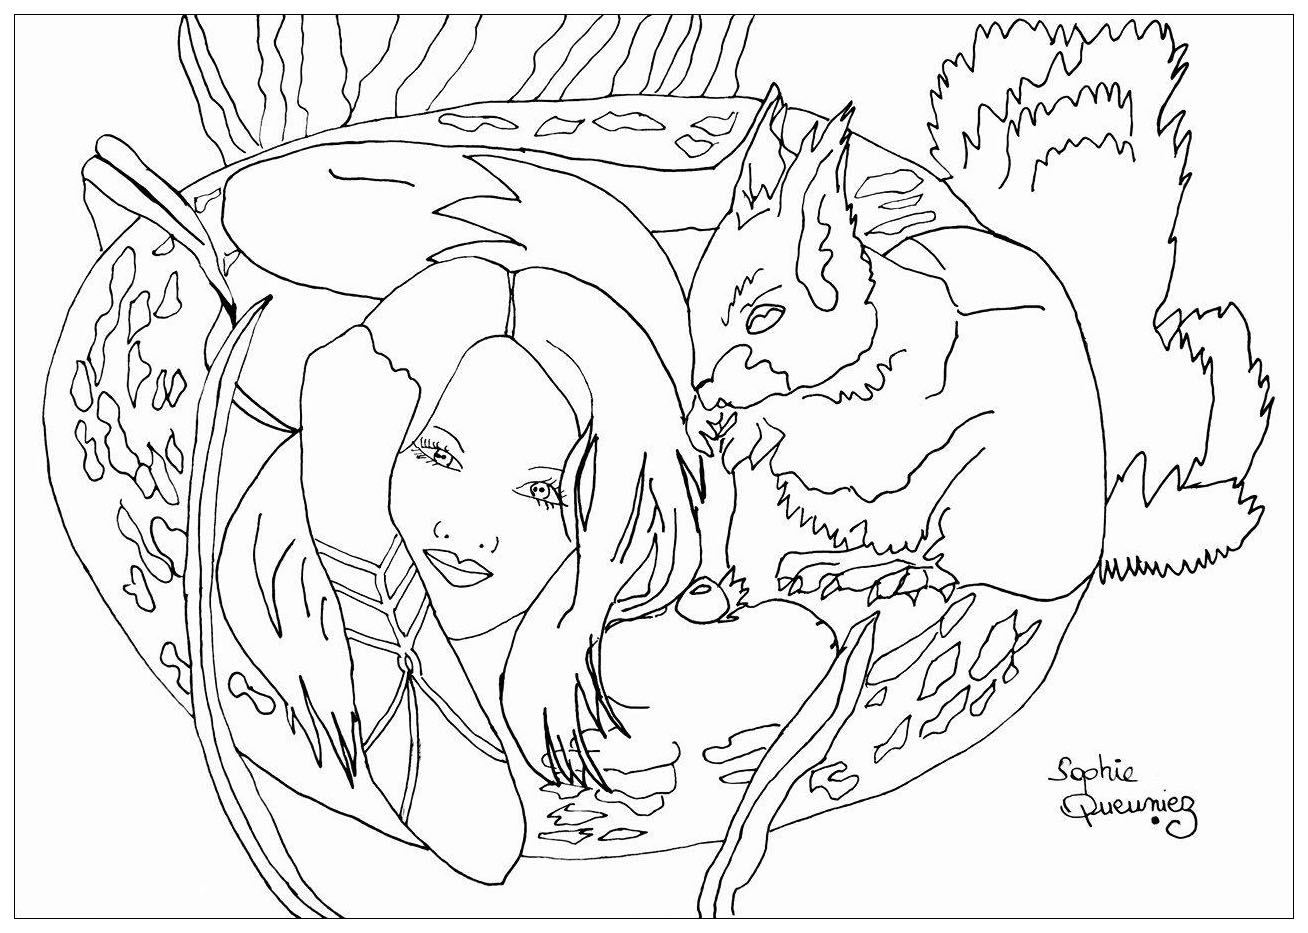 Donna e scoiattolo, Artista : Sophie Queuniez-Wojciechowski